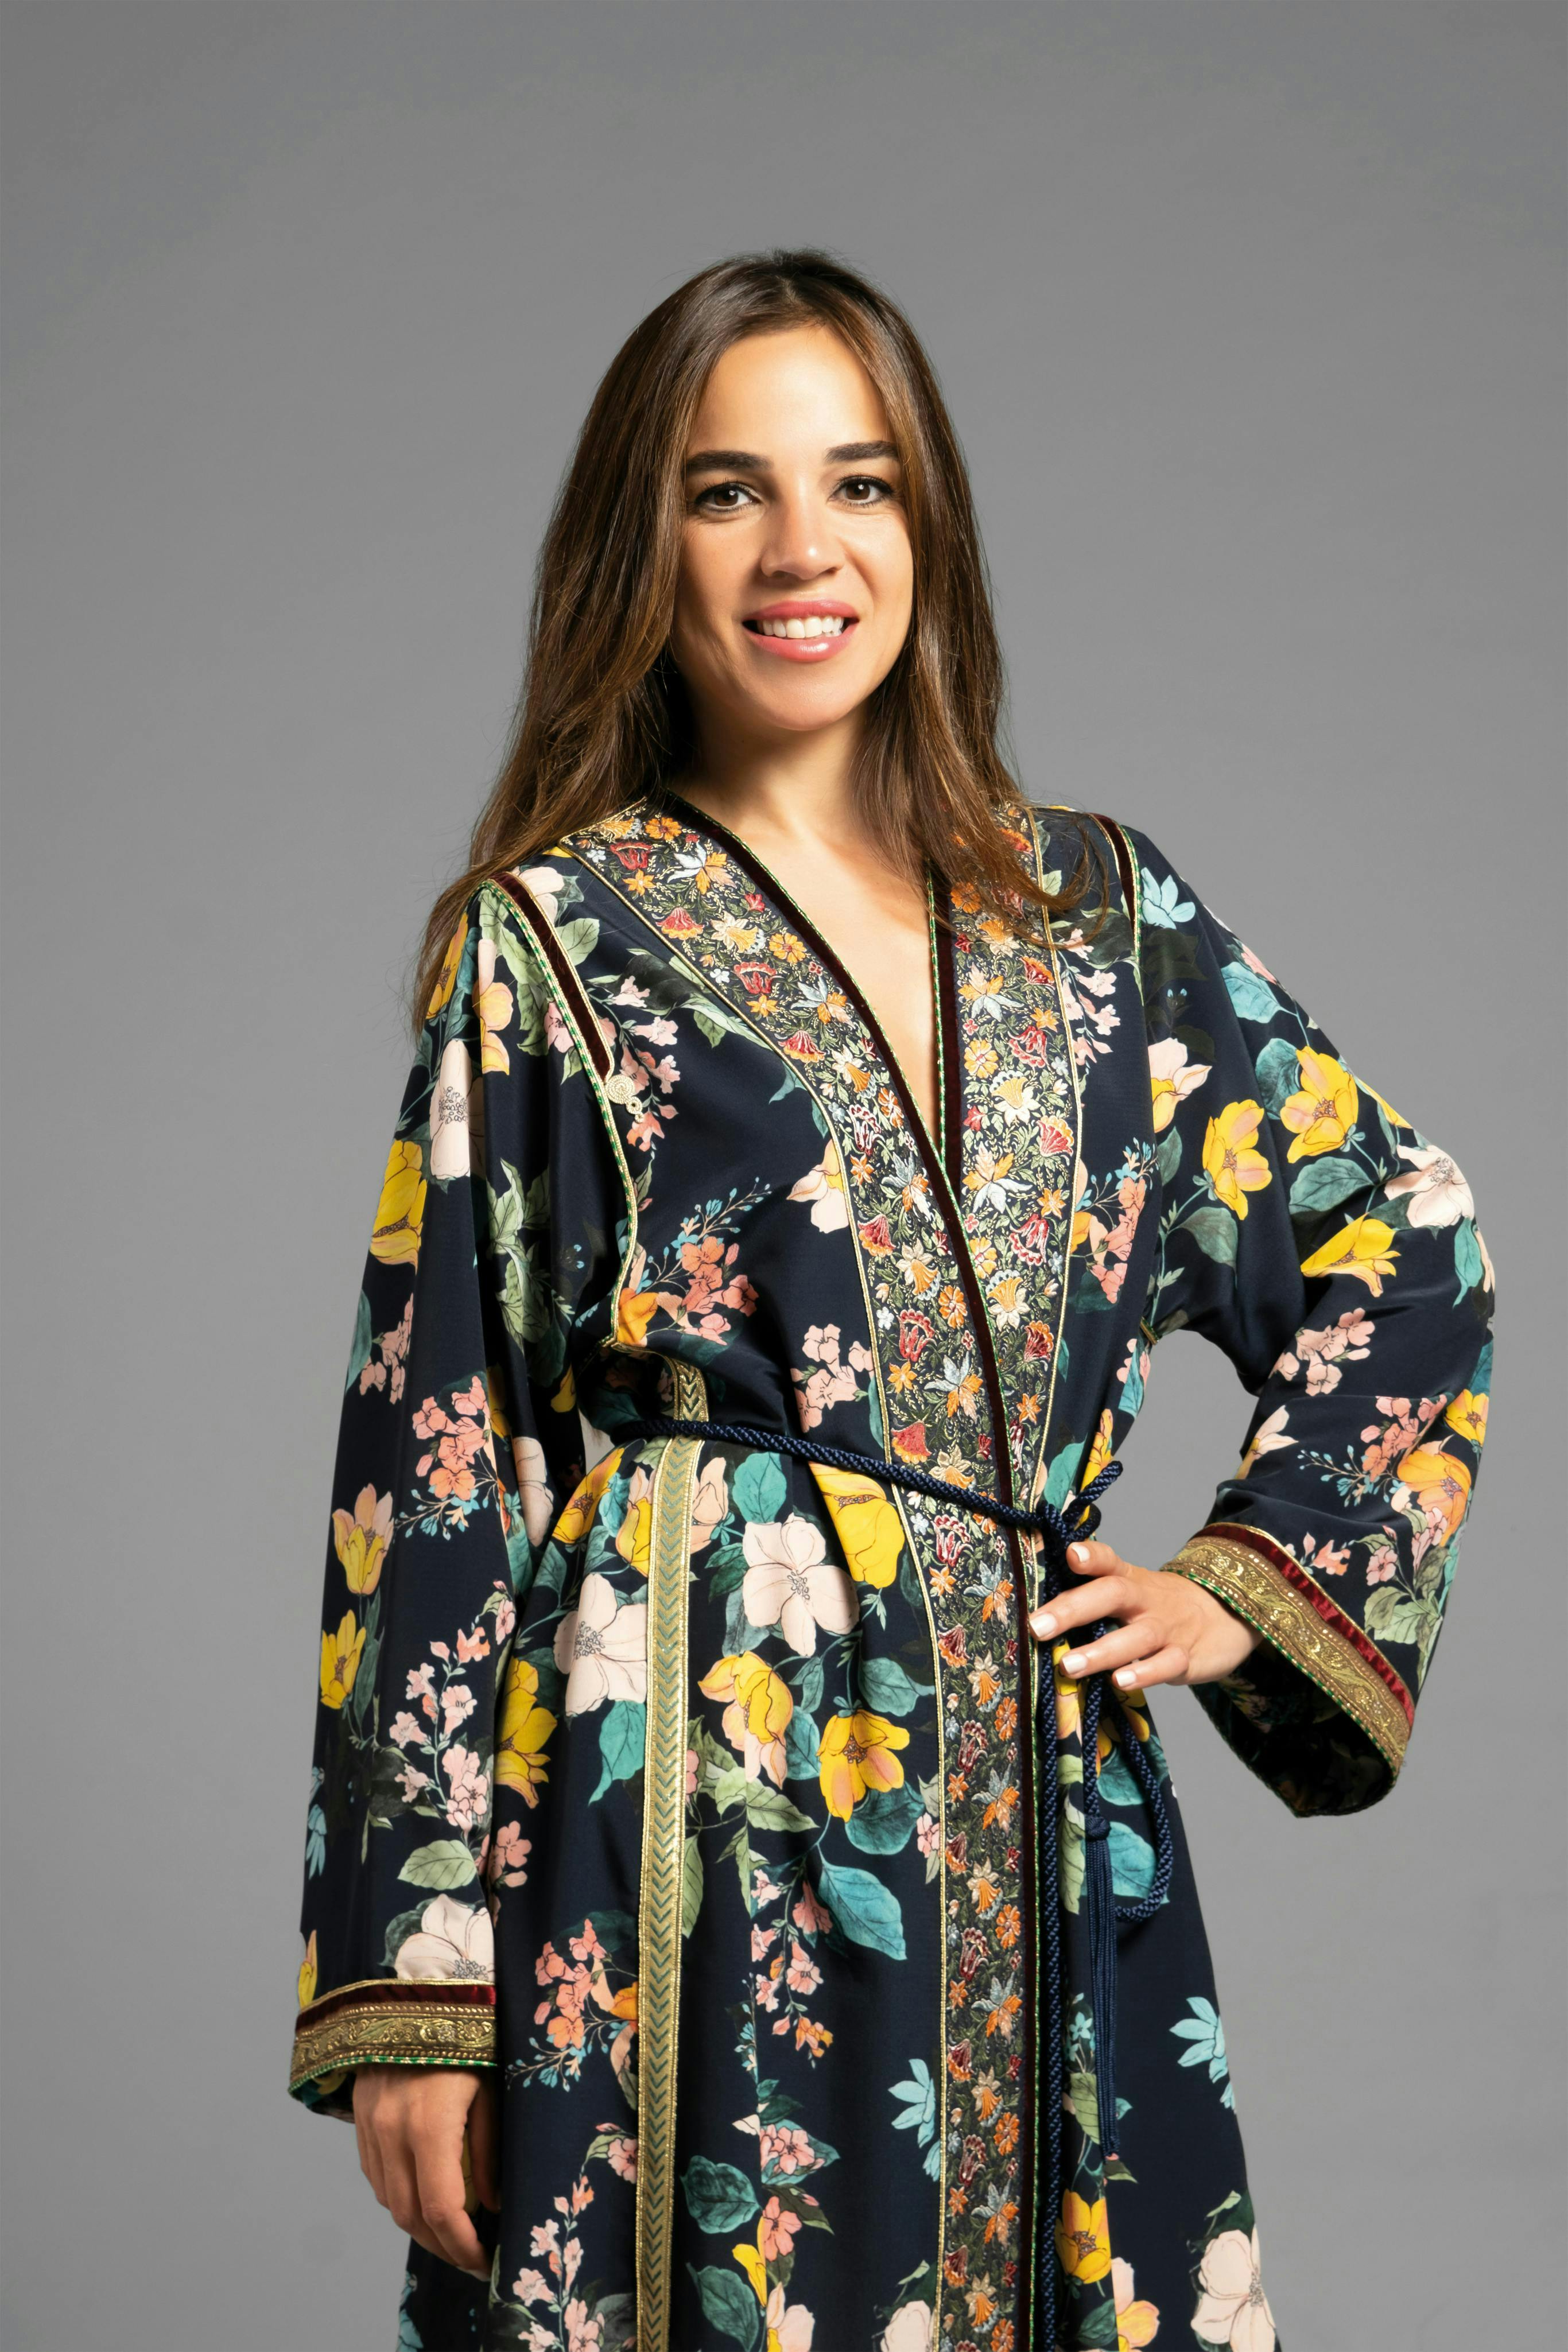 clothing apparel robe fashion gown sleeve kimono person human evening dress